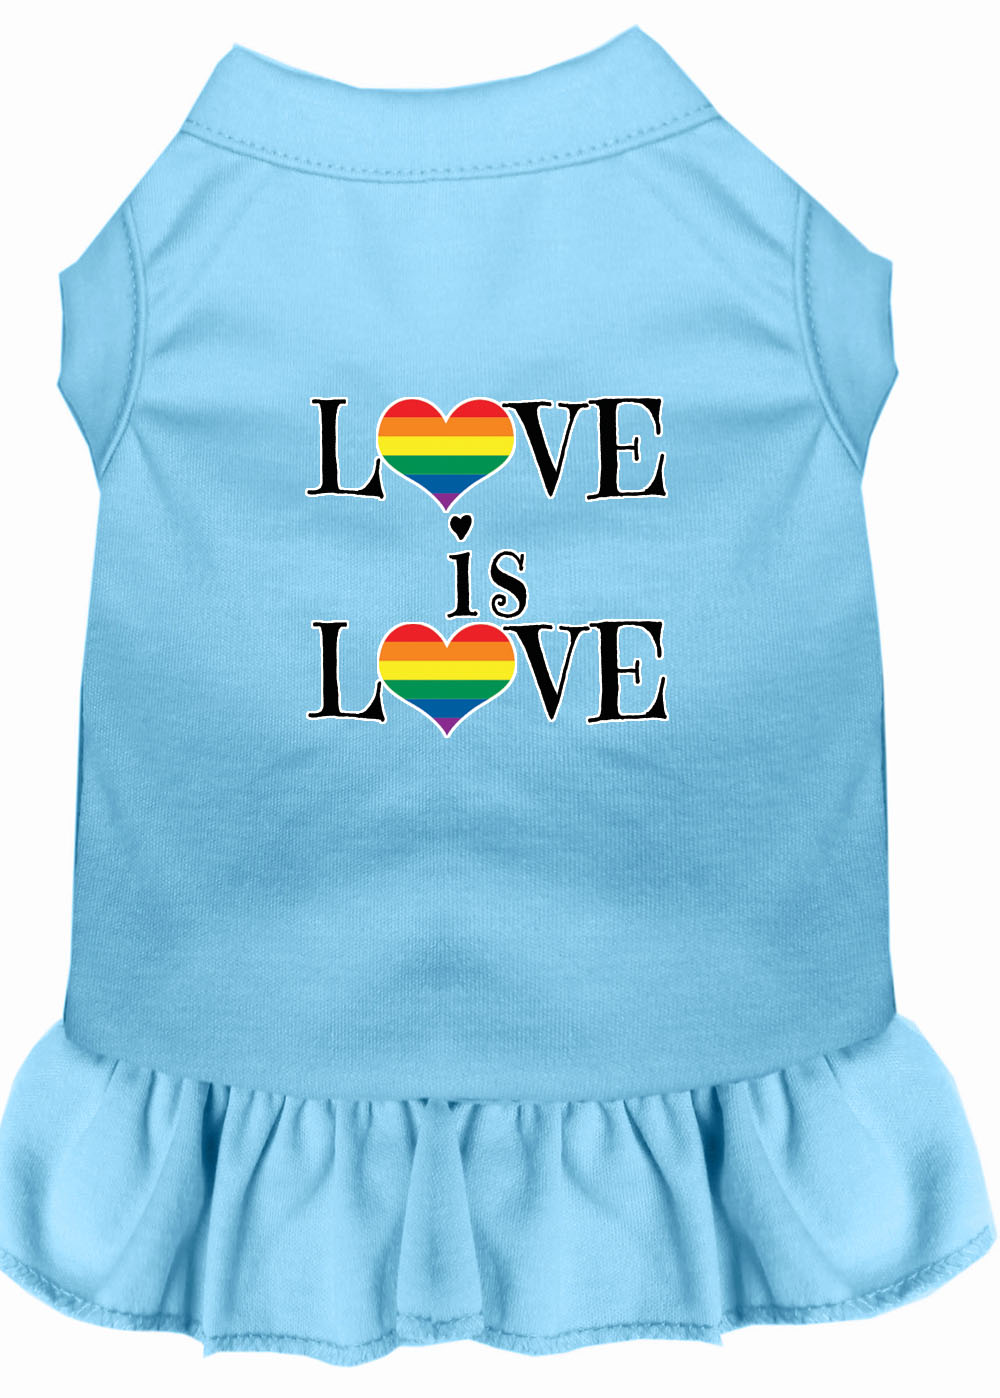 Love is Love Screen Print Dog Dress Baby Blue XS